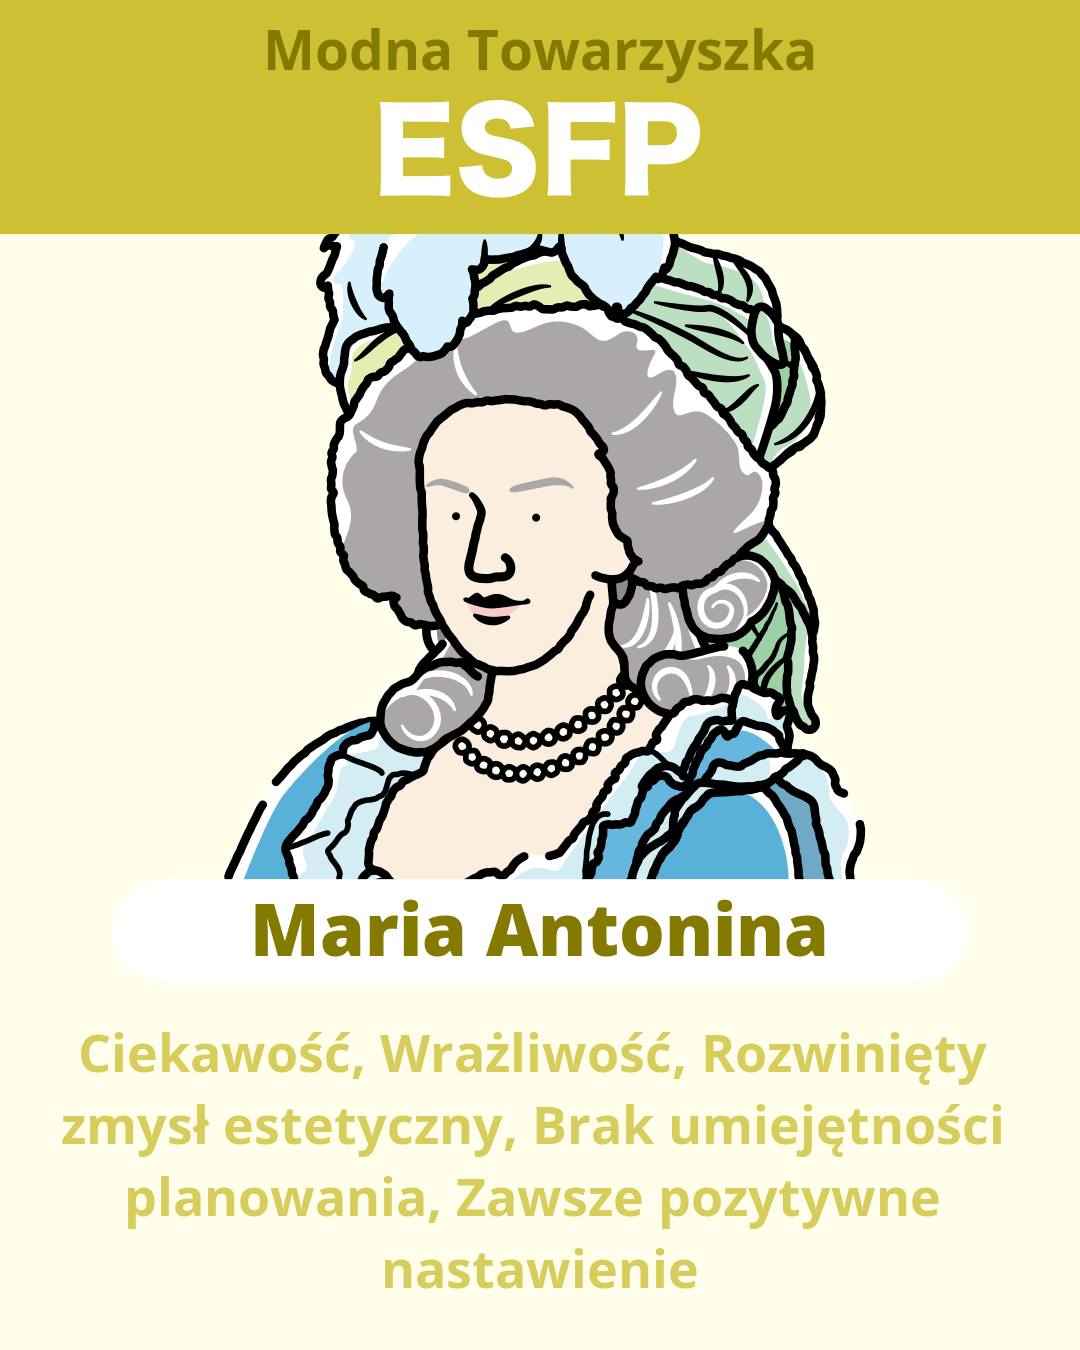 Maria Antonina - ESFP